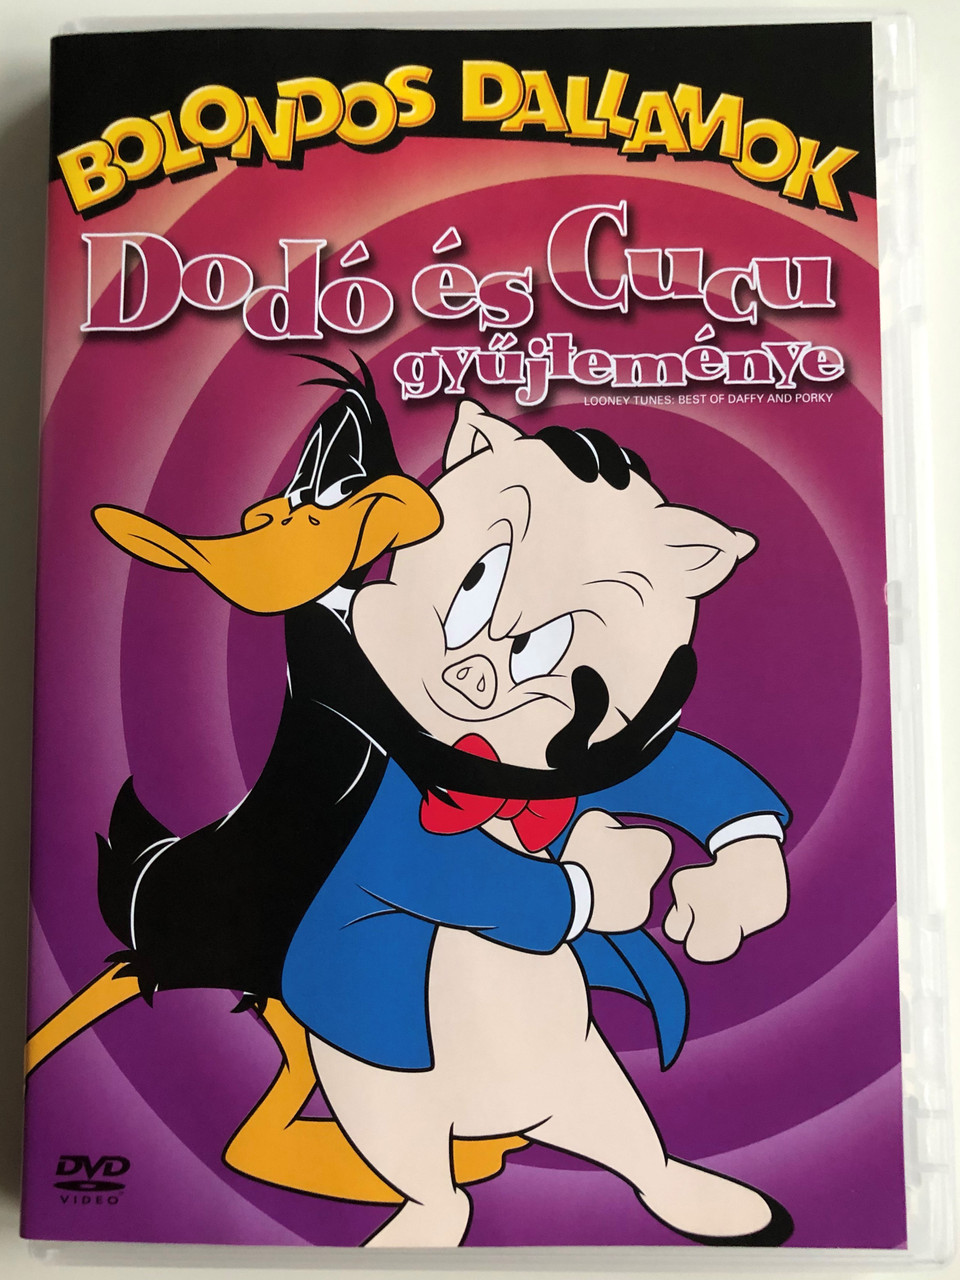 Looney Tunes: Best of Daffy and Porky DVD Bolondos dallamok: Dodó és Cucu  gyűjteménye / With Hungarian